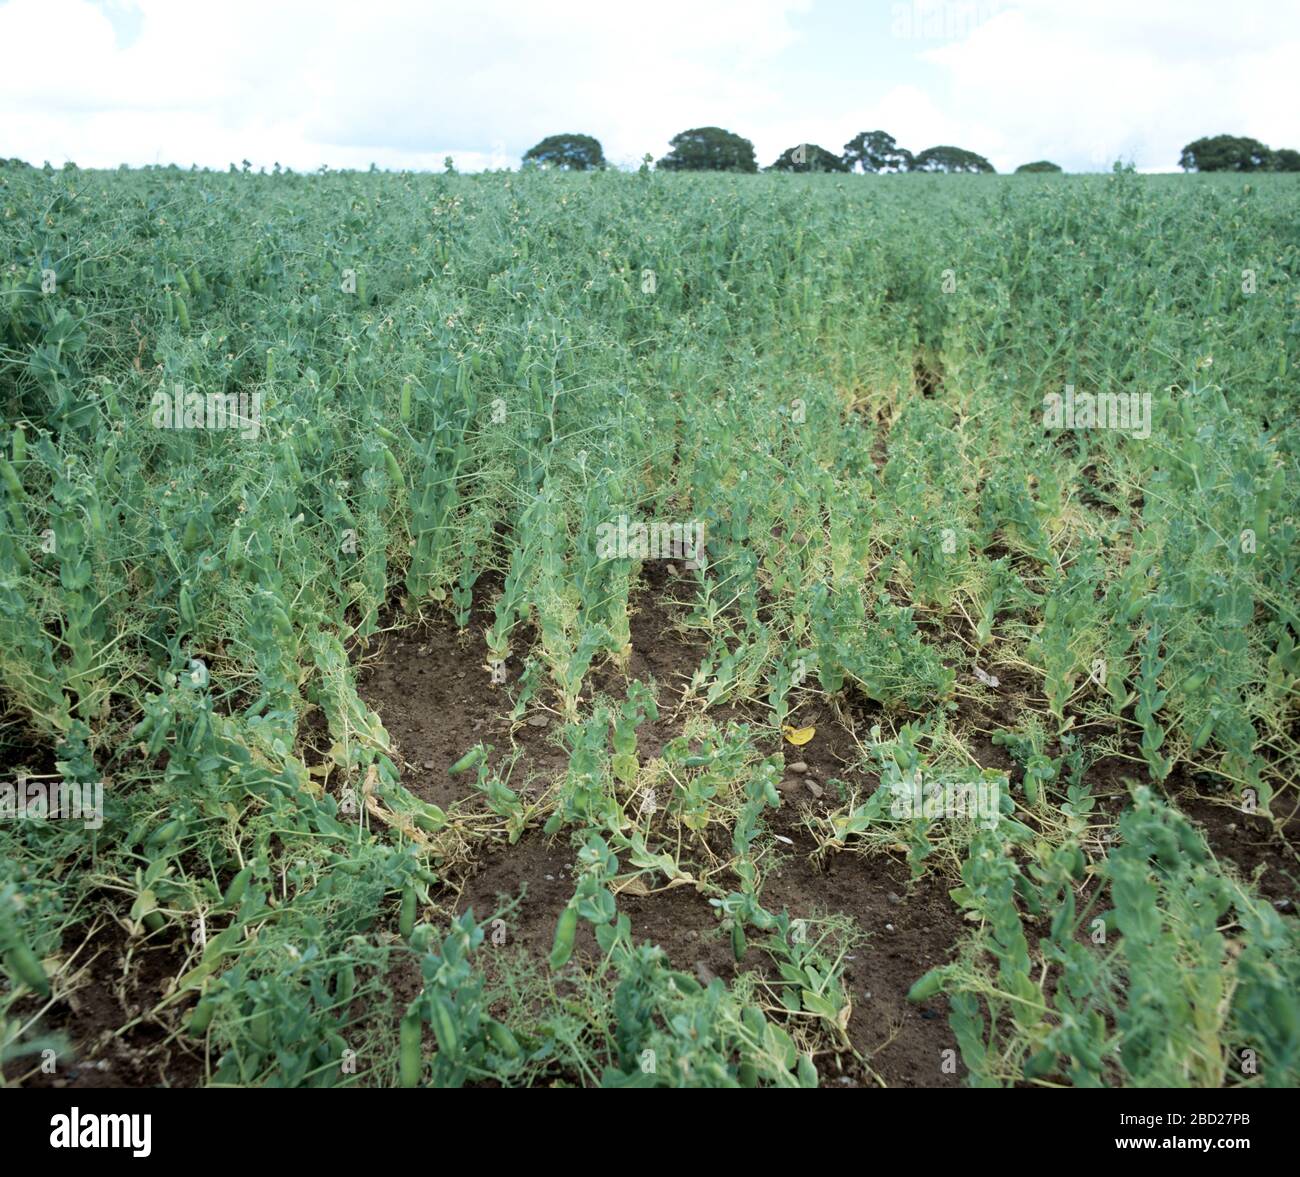 Footrot (Didymella pinodella or Phoma pinodella) infection creating gaps in a mature pea crop Stock Photo